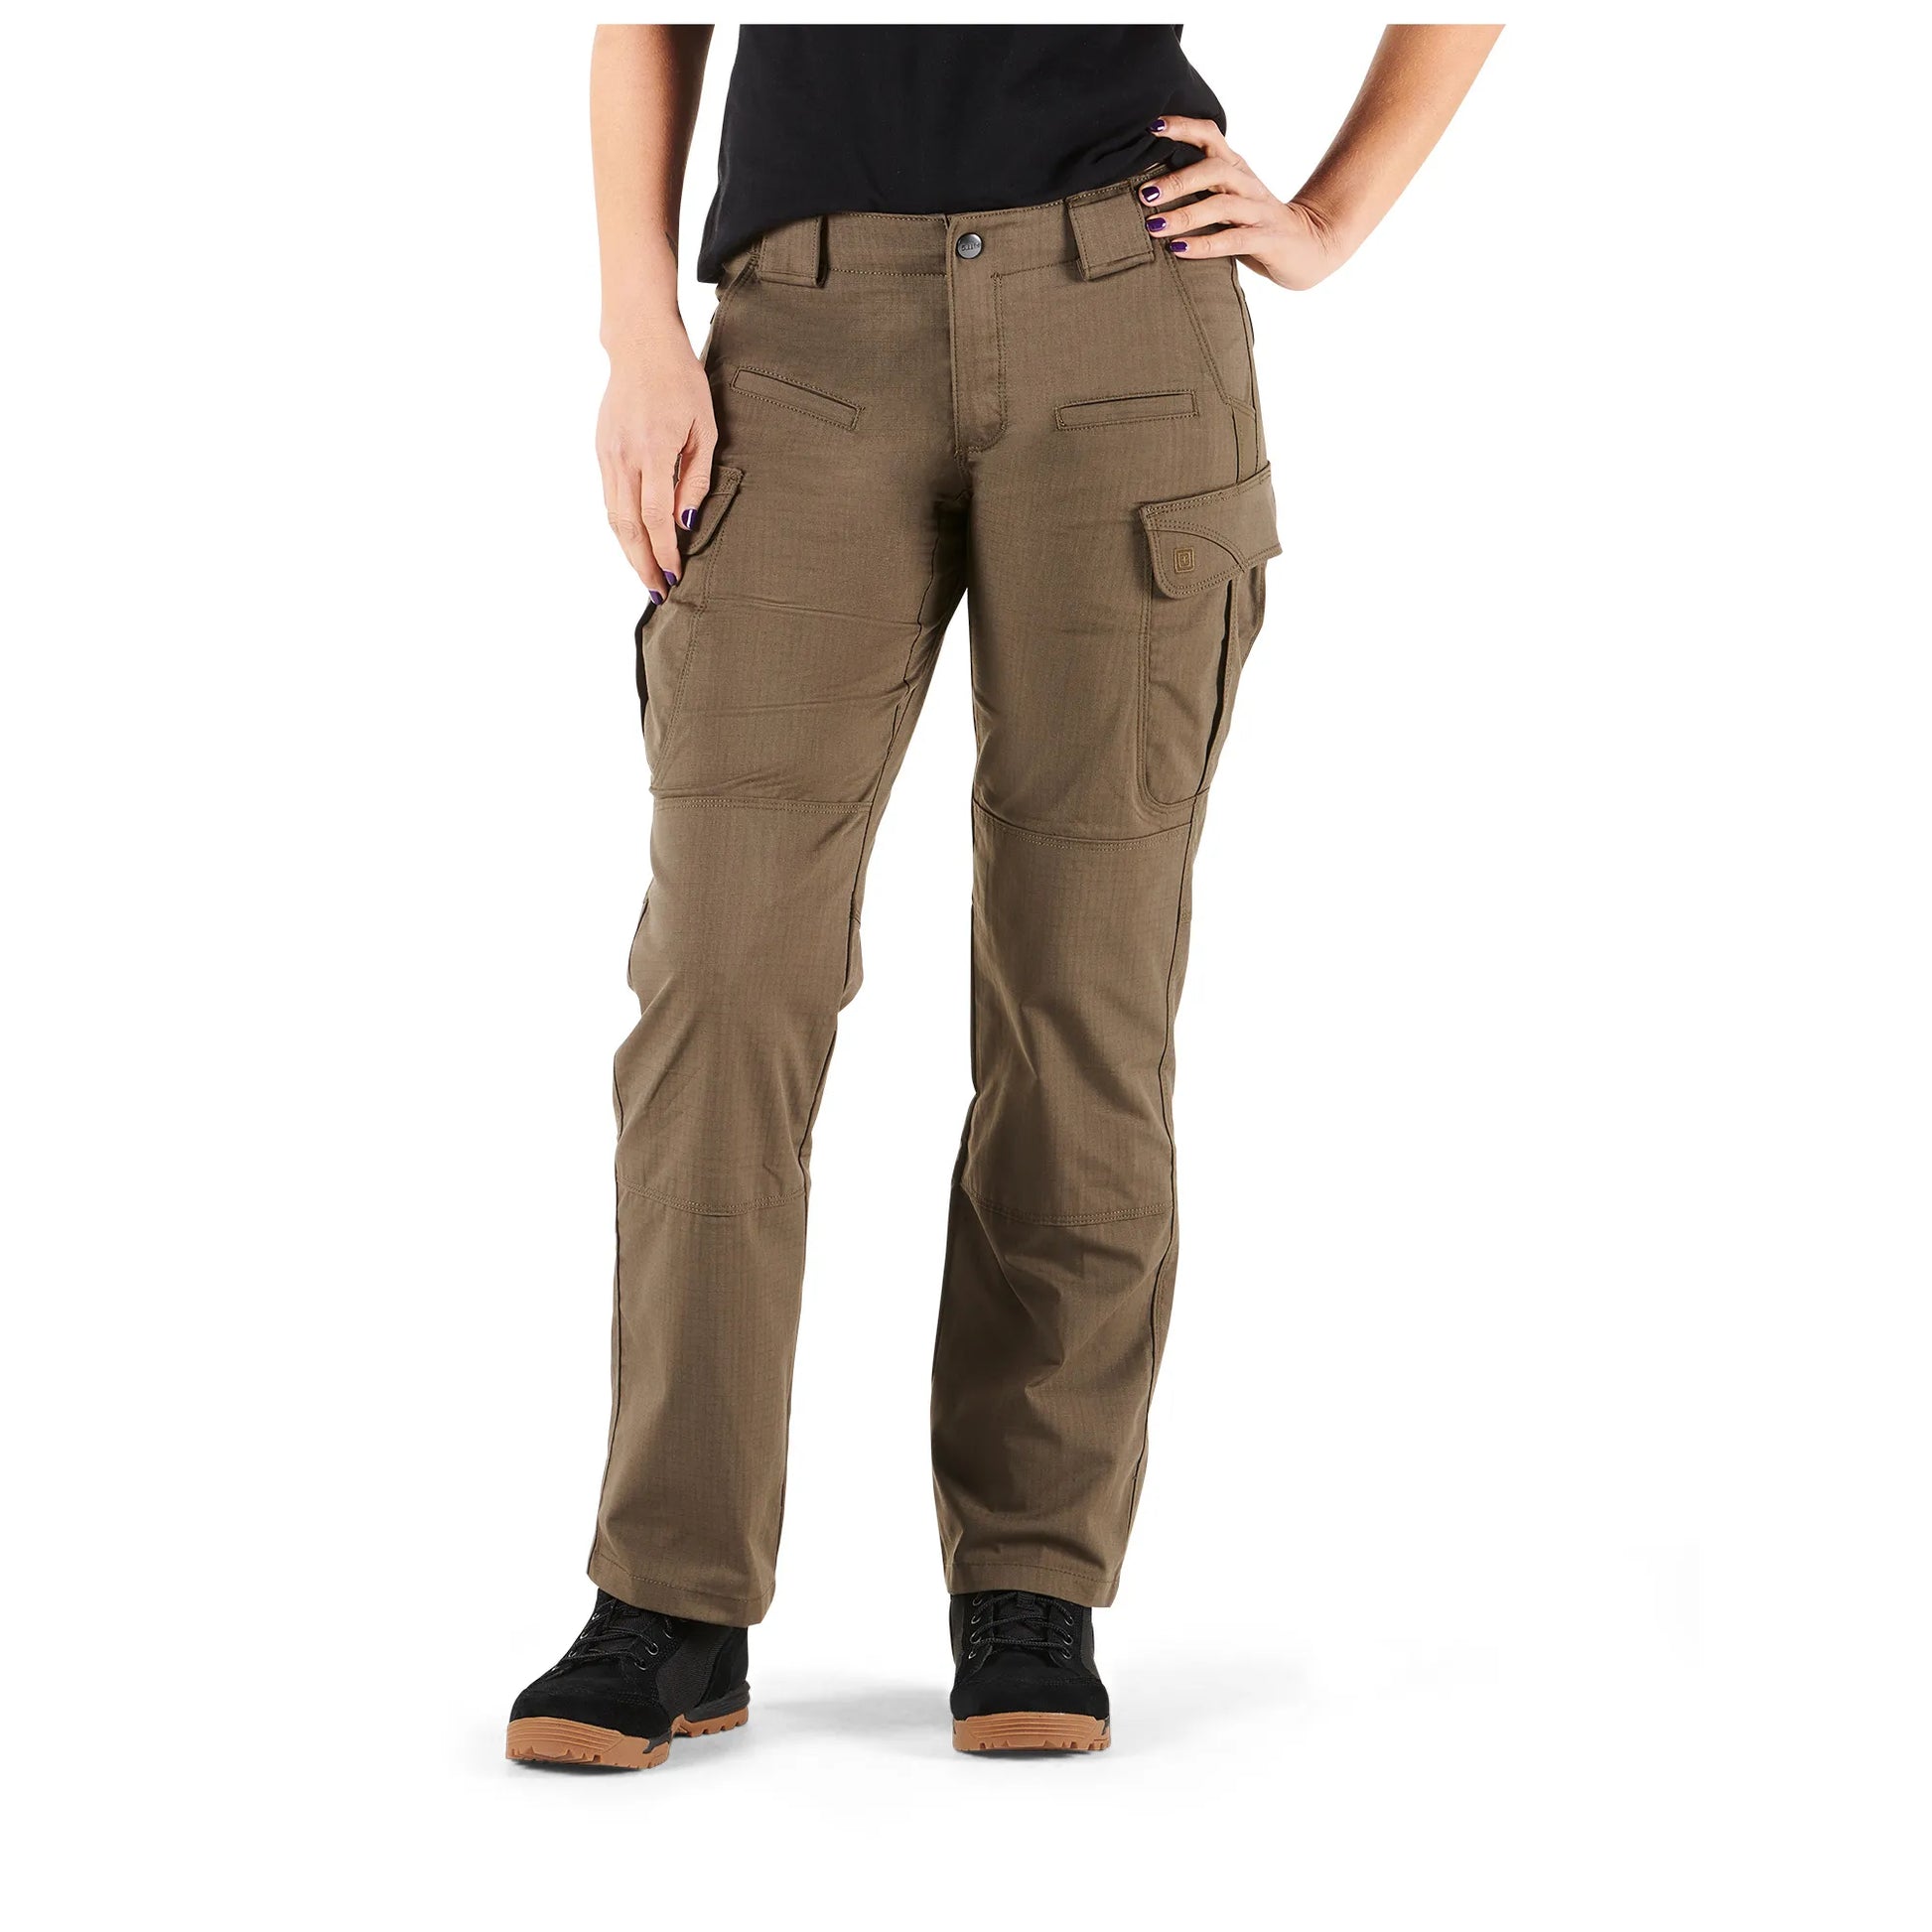 5.11 Tactical Women's STRYKE Pants - Tundra-Tac Essentials